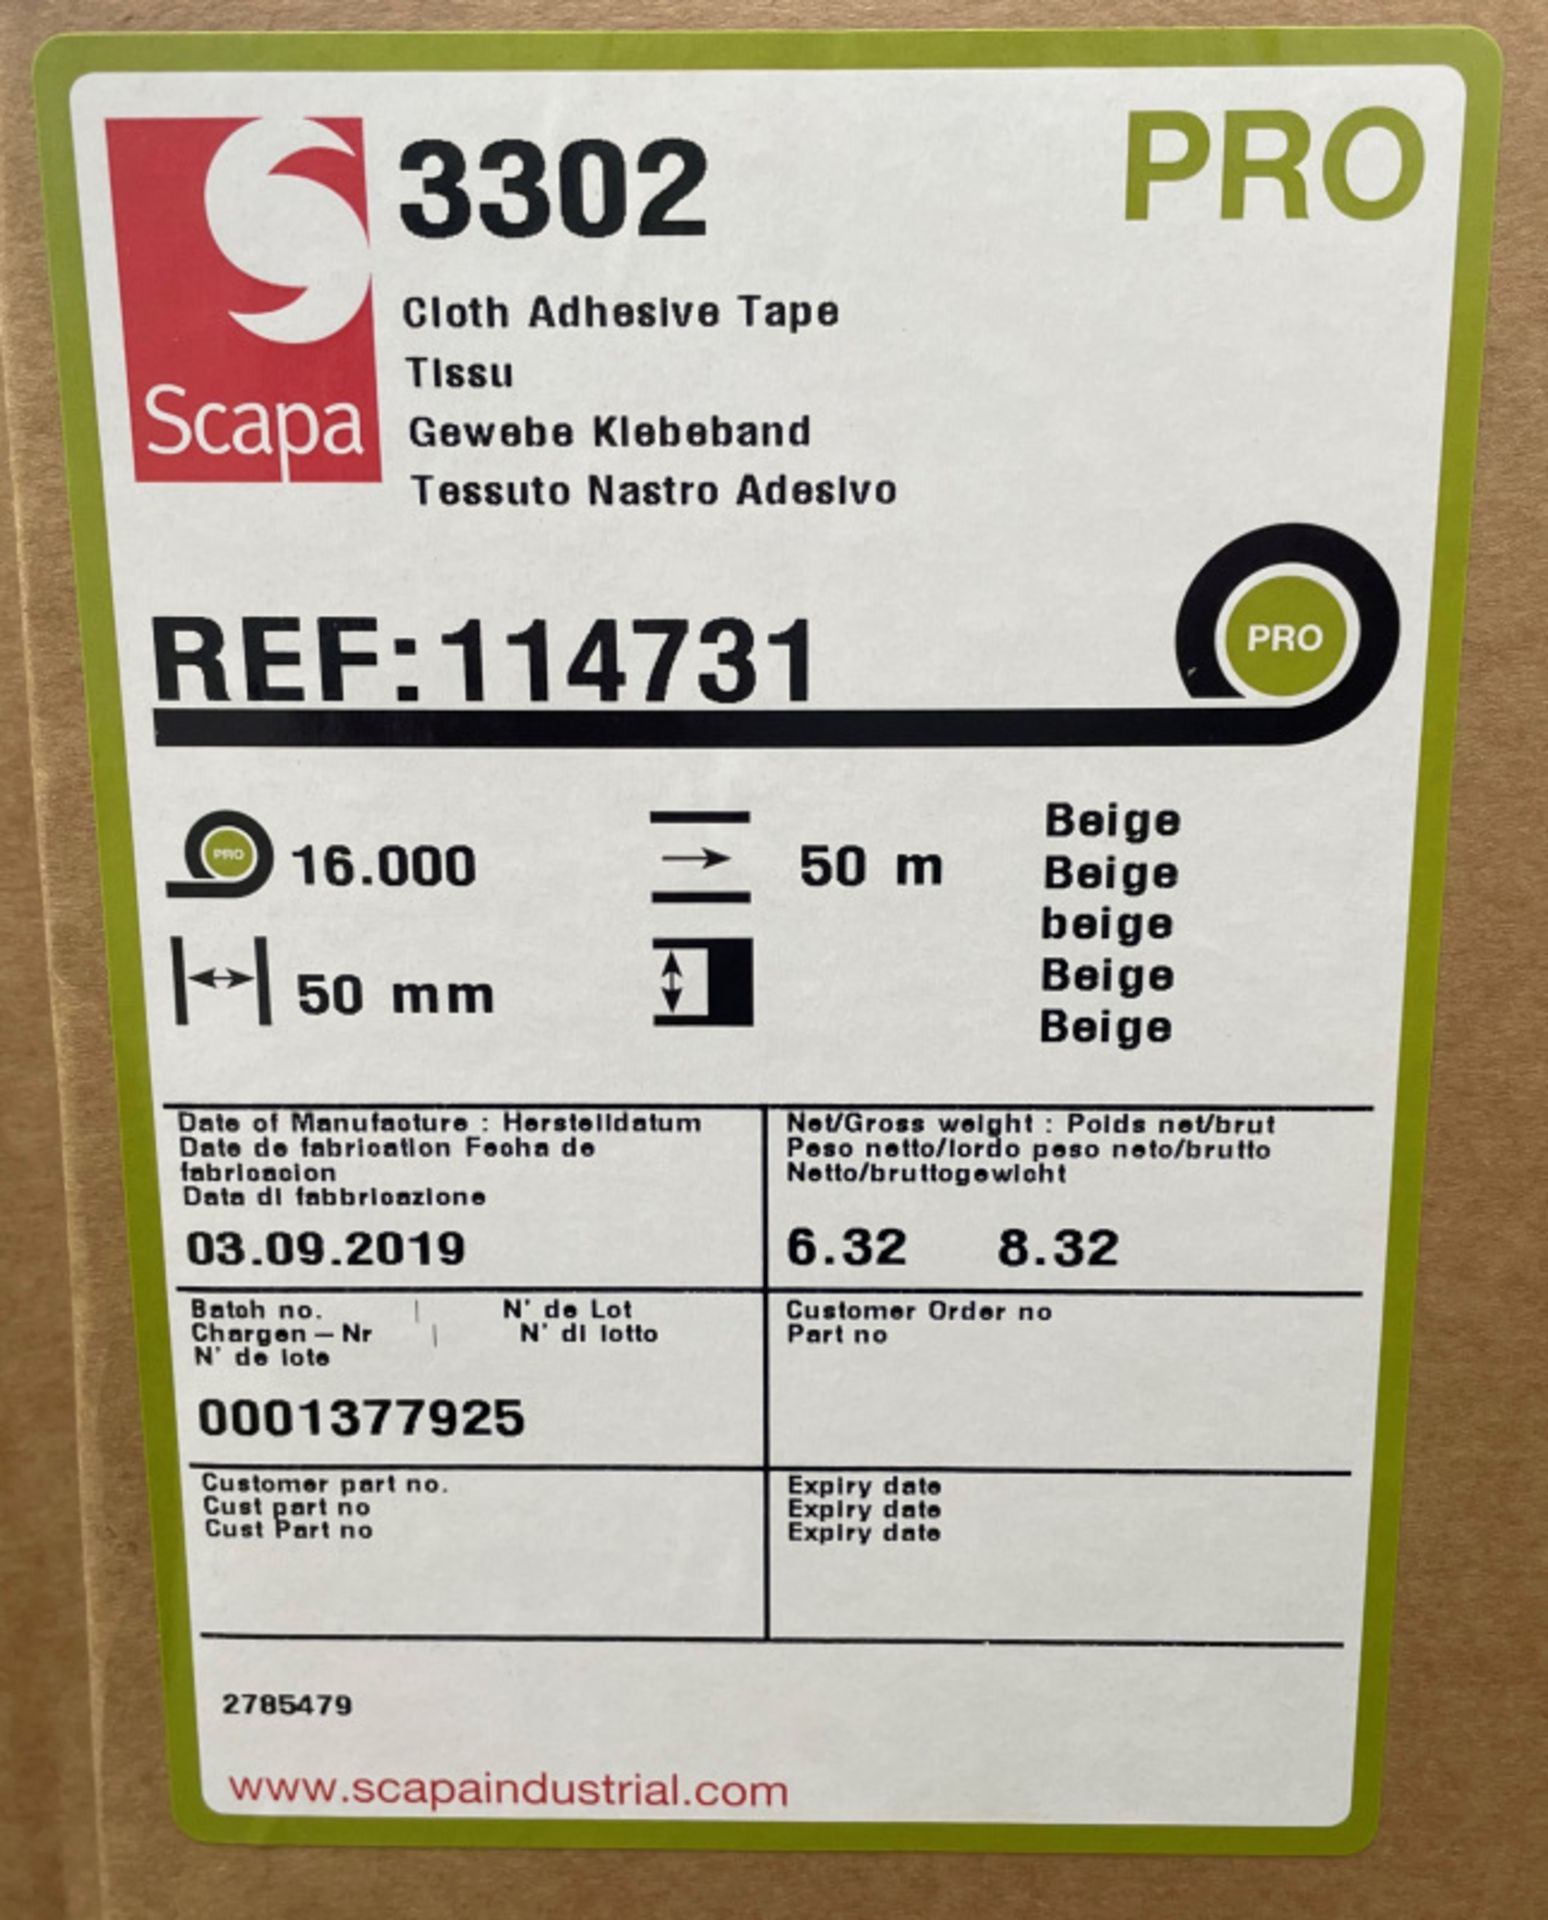 Scapa 3302 Pro Tape - Buff Tan/Beige - 50mm x 50M rolls - 16 rolls per box - 33 boxes - Image 4 of 5